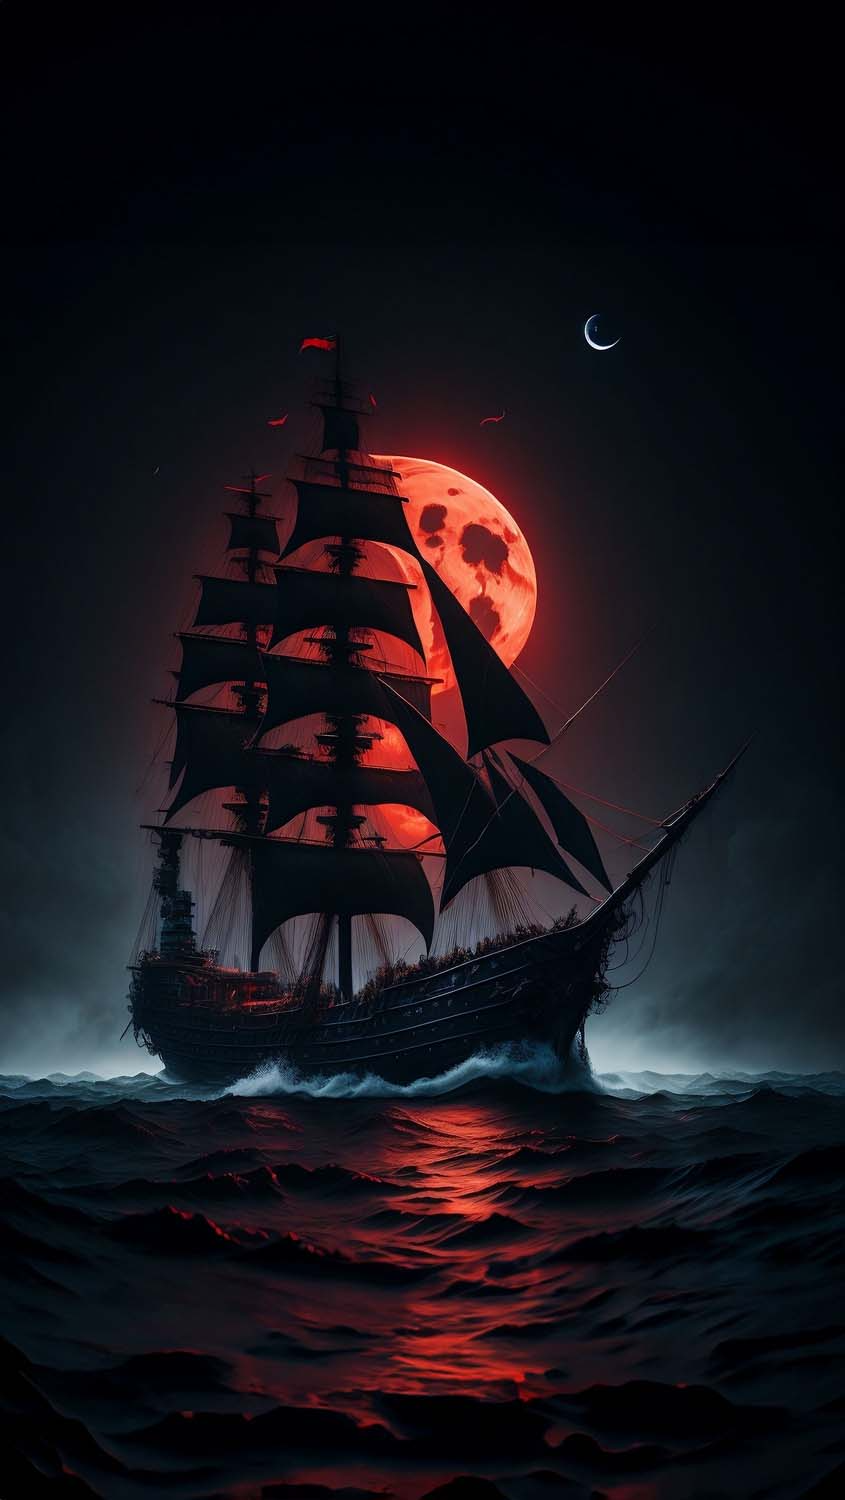 4K Wallpaper: Steampunk Pirate ship : r/StableDiffusion